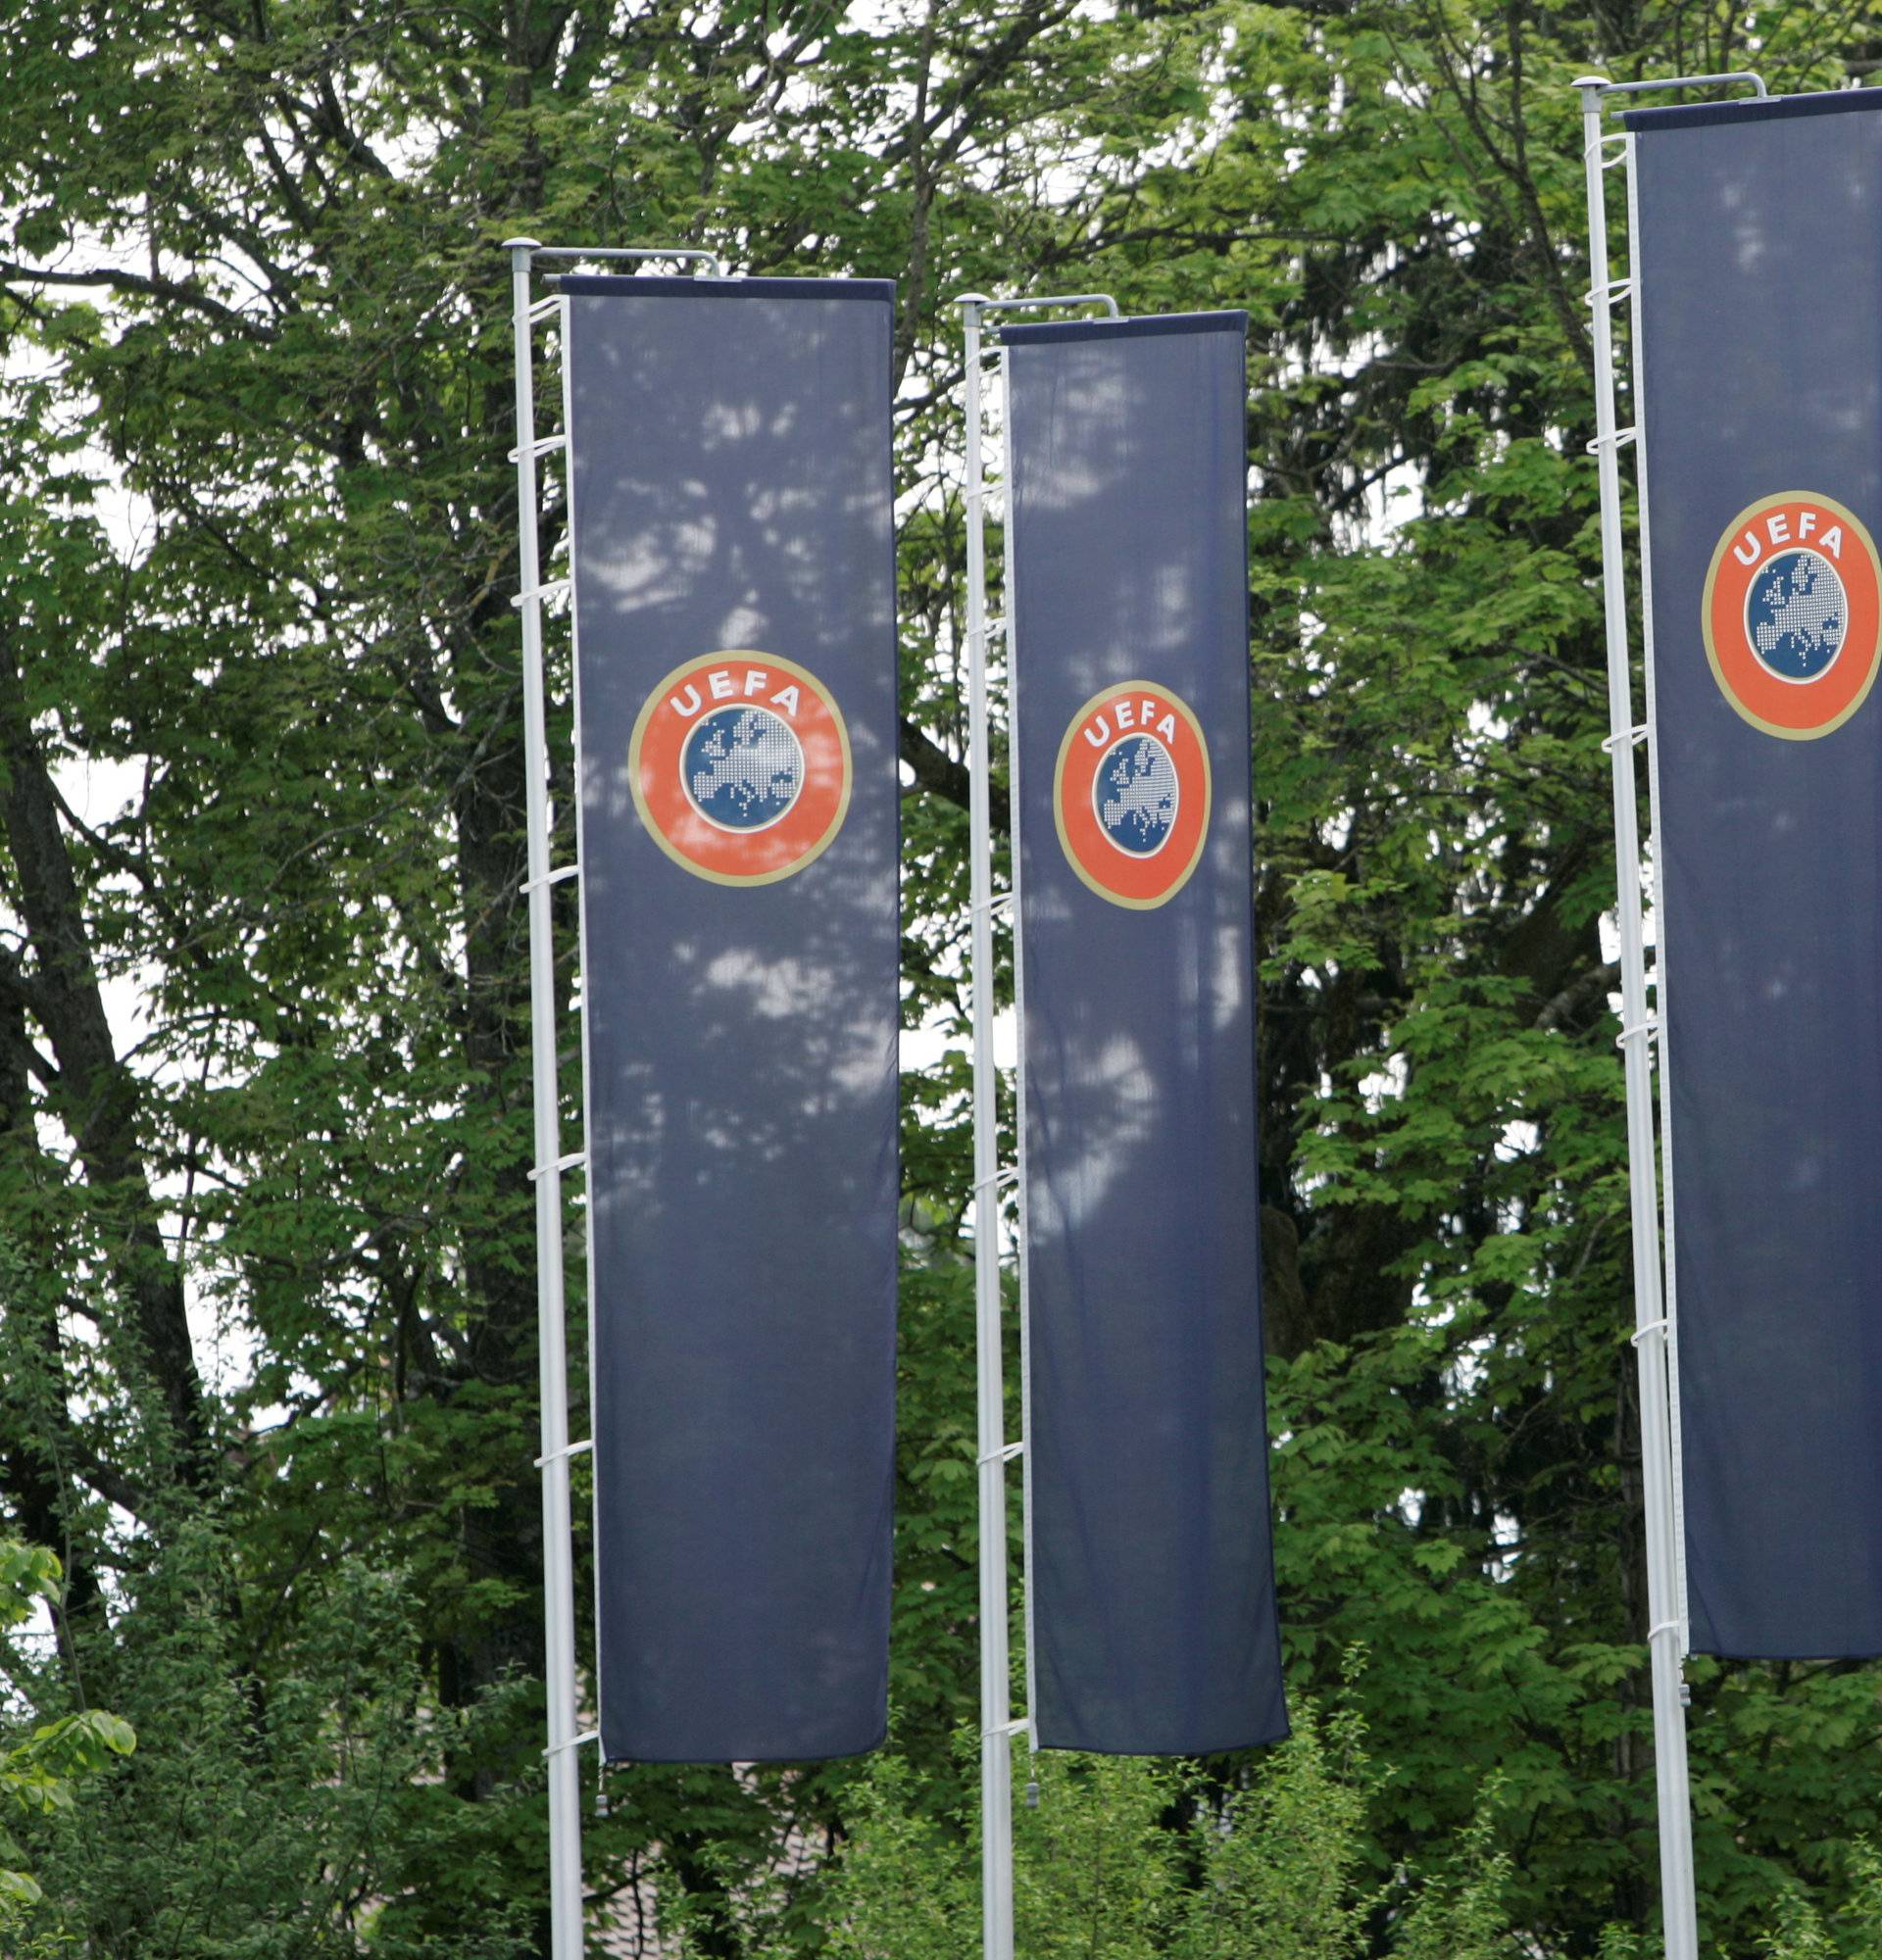 UEFA headquarters in Nyon